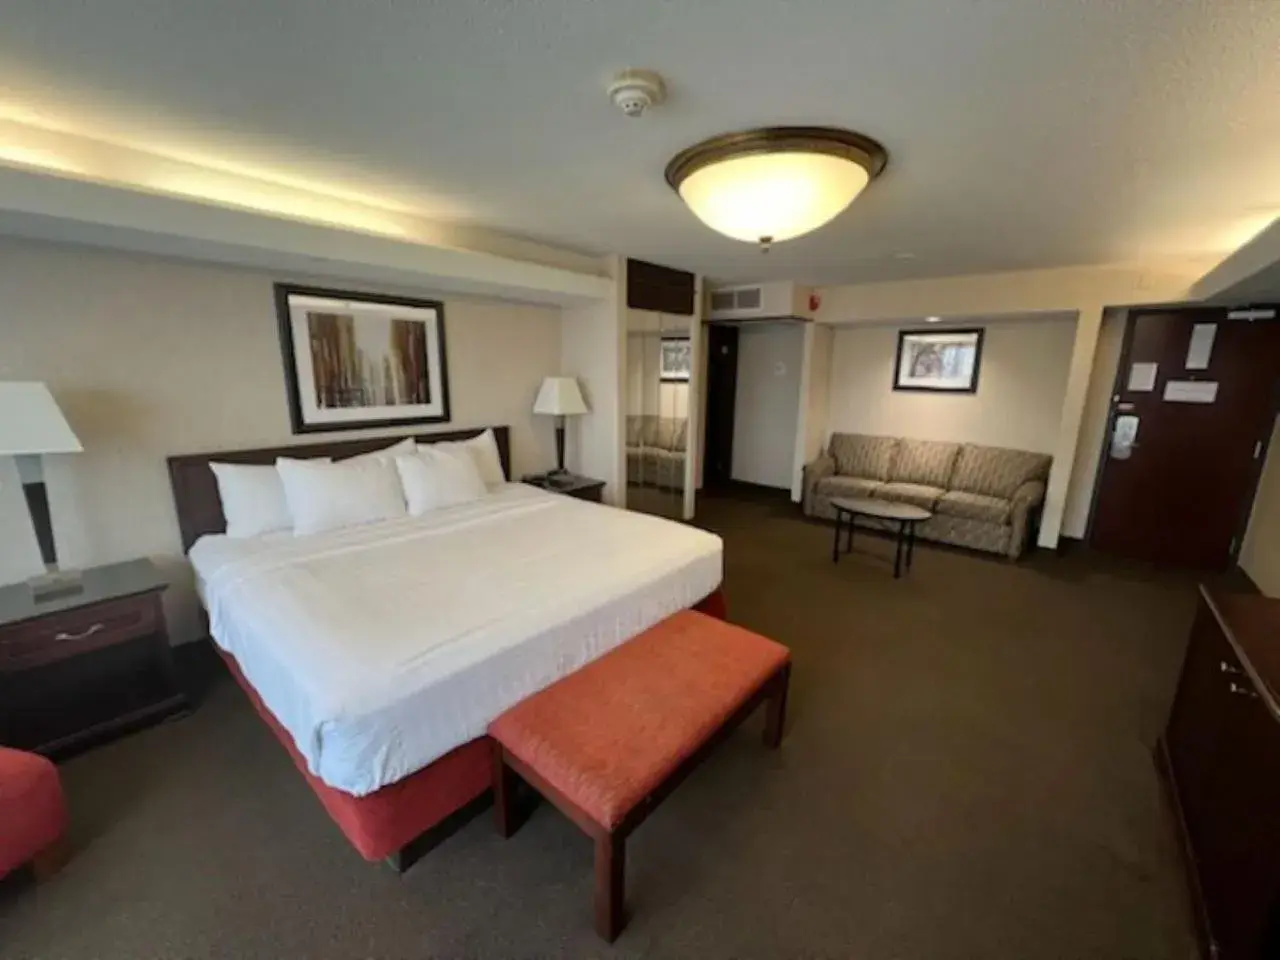 Bed in Hotel Lotus Kansas City Merriam